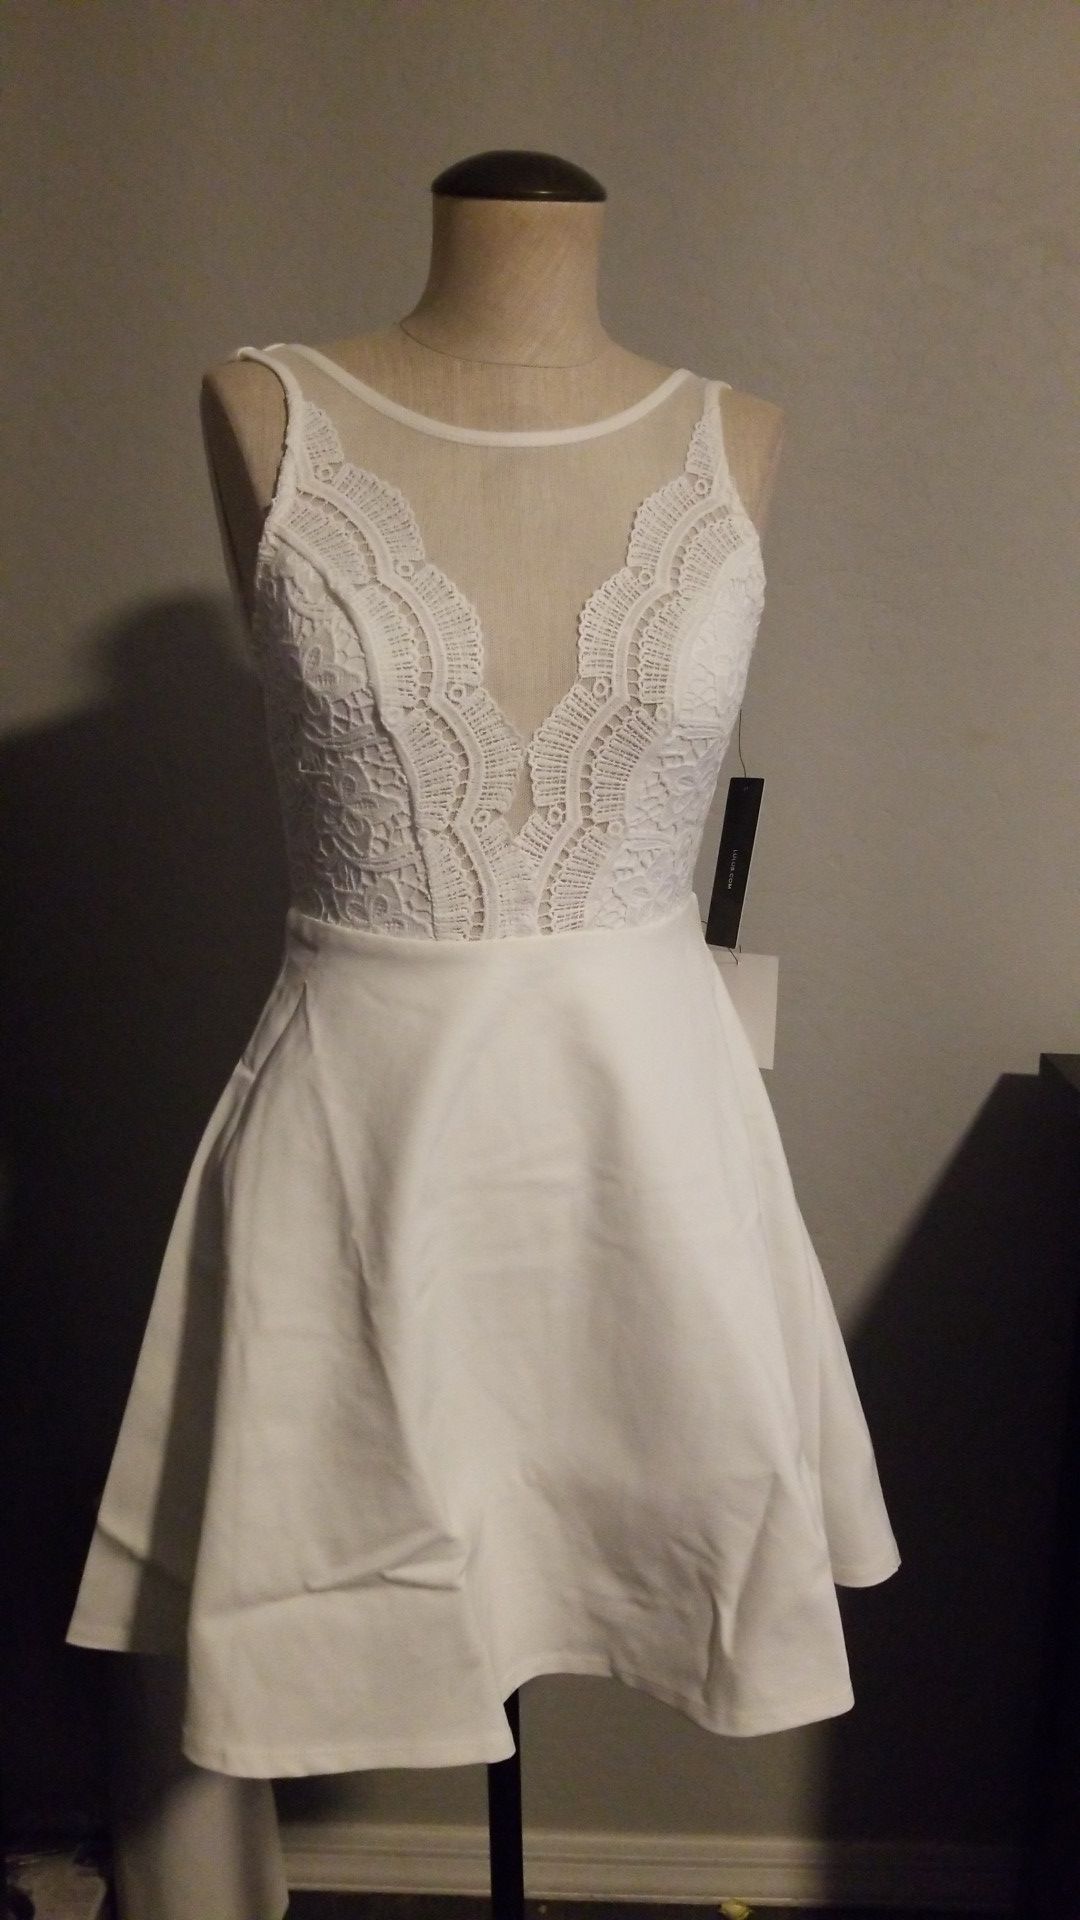 New Size S Small women's white skater dress sheer mesh crochet lace wedding bridal shower bachelorette party dancing dress